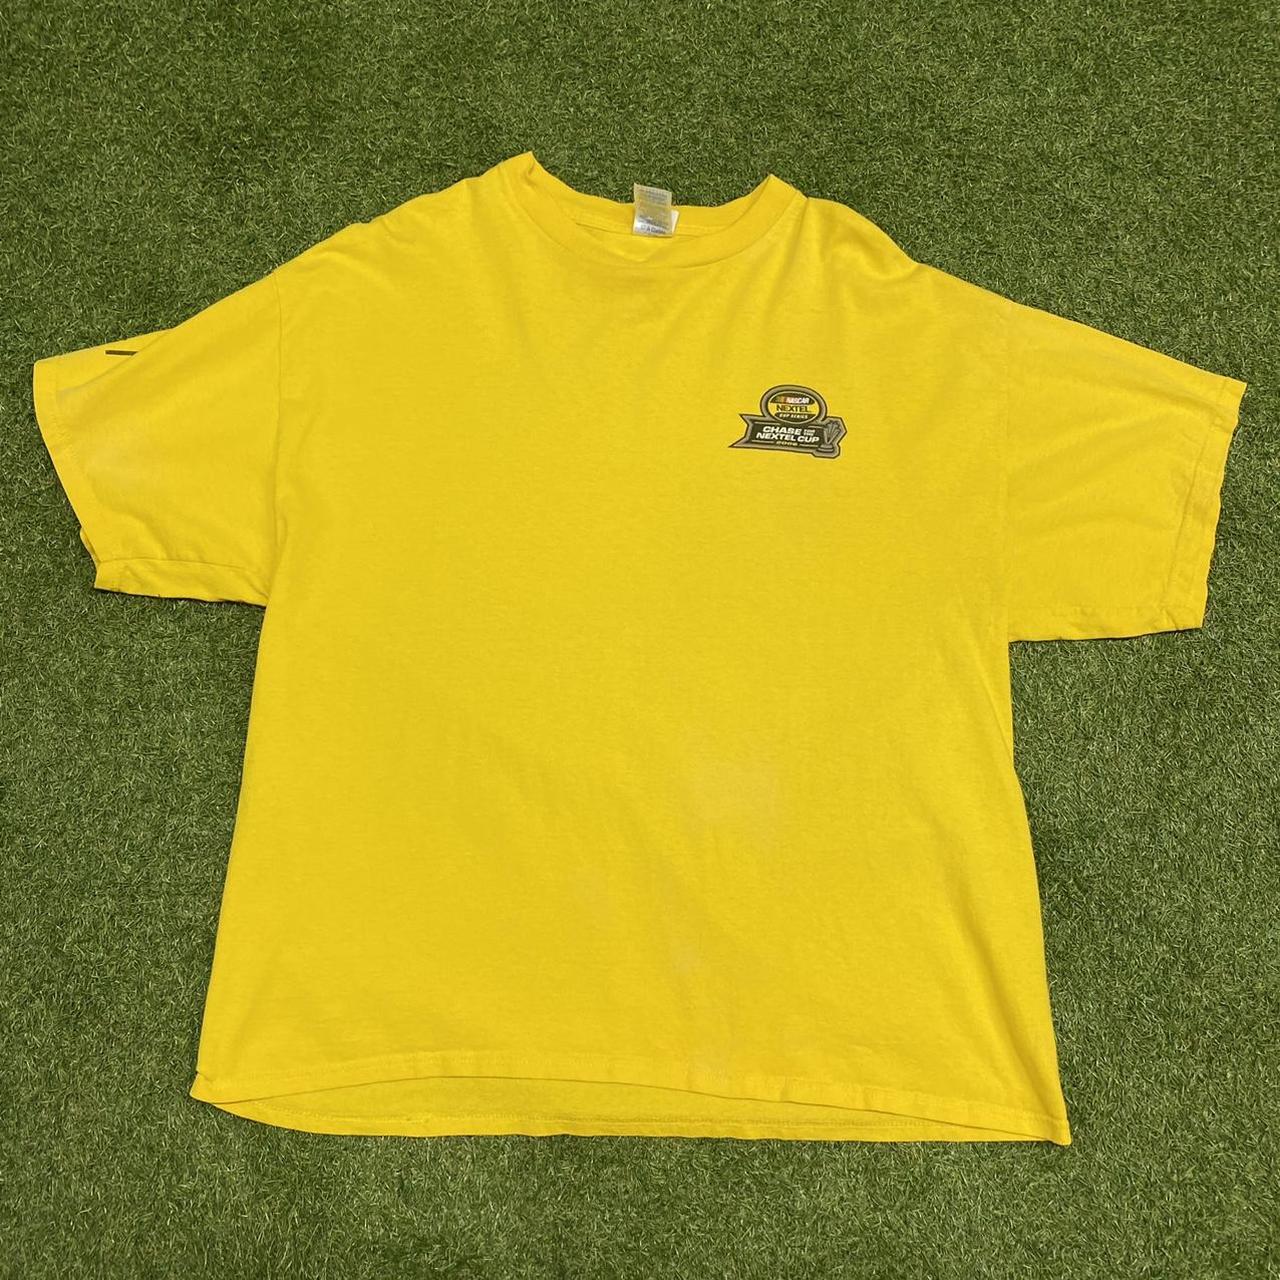 Yellow nascar logo crew neck tshirt. Small logo on... - Depop